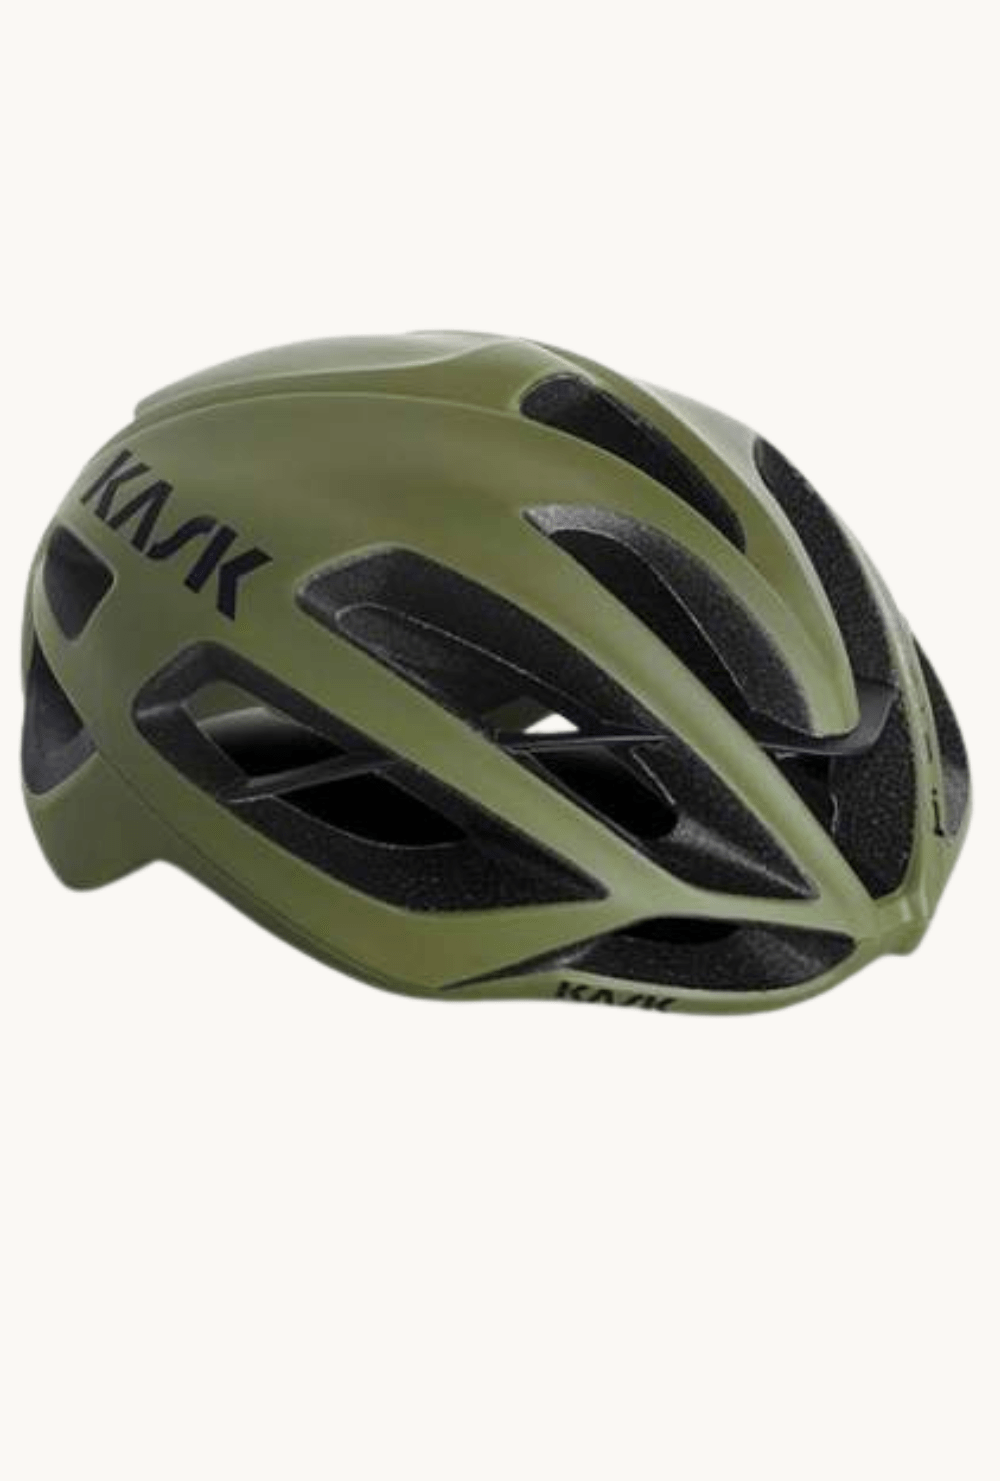 Helmet - Kask Protone Matt Olivemedium (52-58cm) / Matt Olive